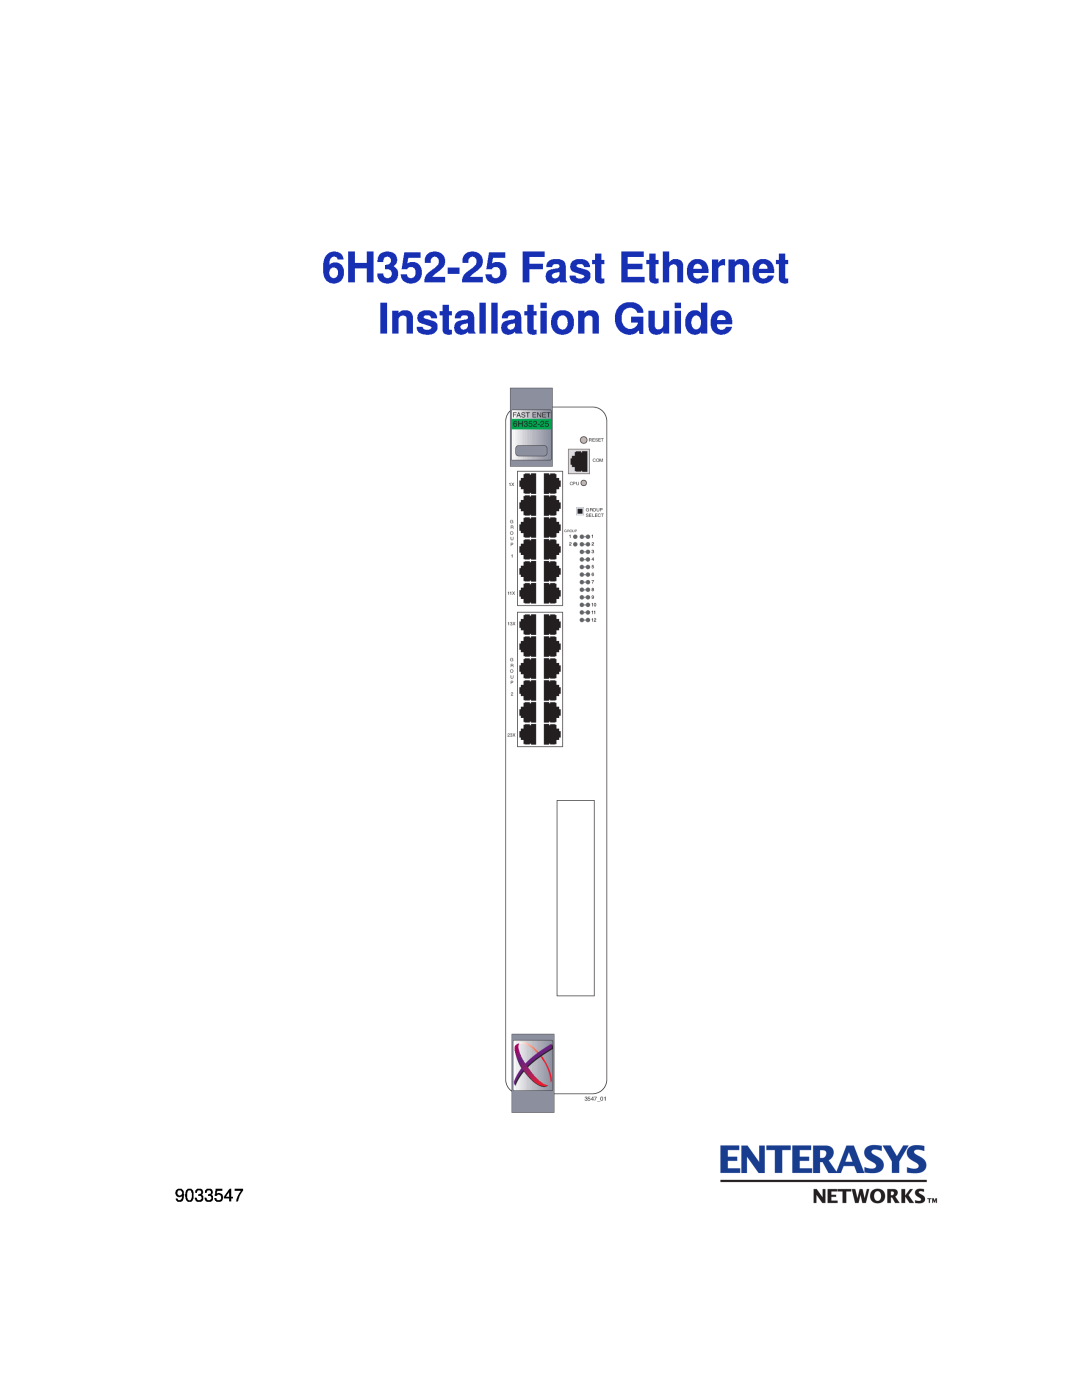 Enterasys Networks manual 6H352-25 Fast Ethernet Installation Guide, Fast Enet, 354701, Reset Com, 1X G R O U P 